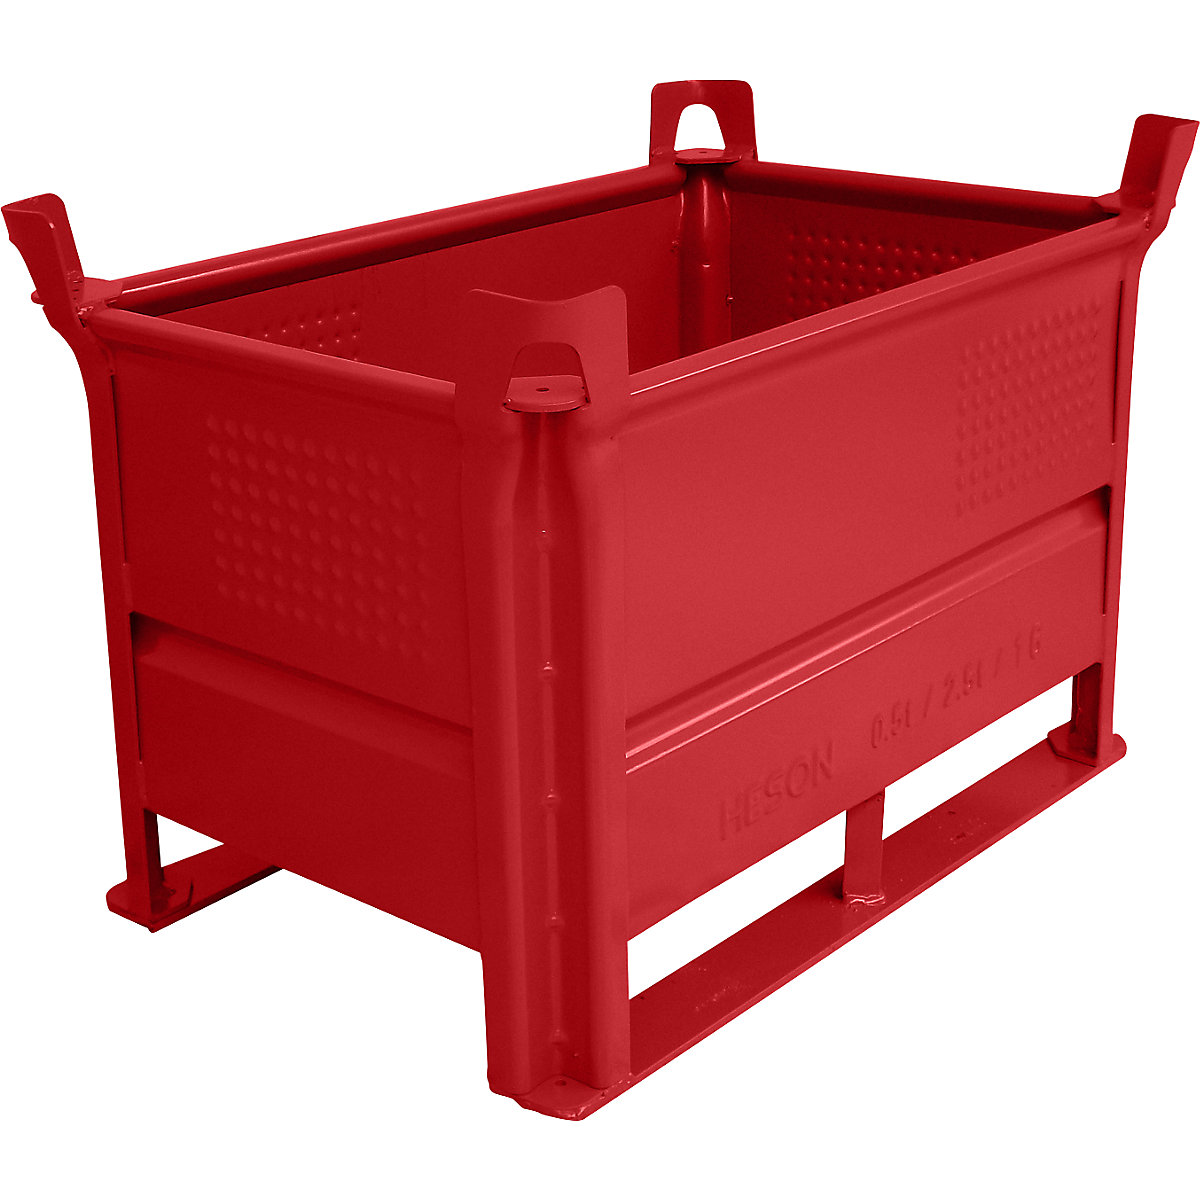 Zaboj za zlaganje z drsniki – Heson, DxŠ 800 x 500 mm, nosilnost 500 kg, rdeča, od 5 kosov-3